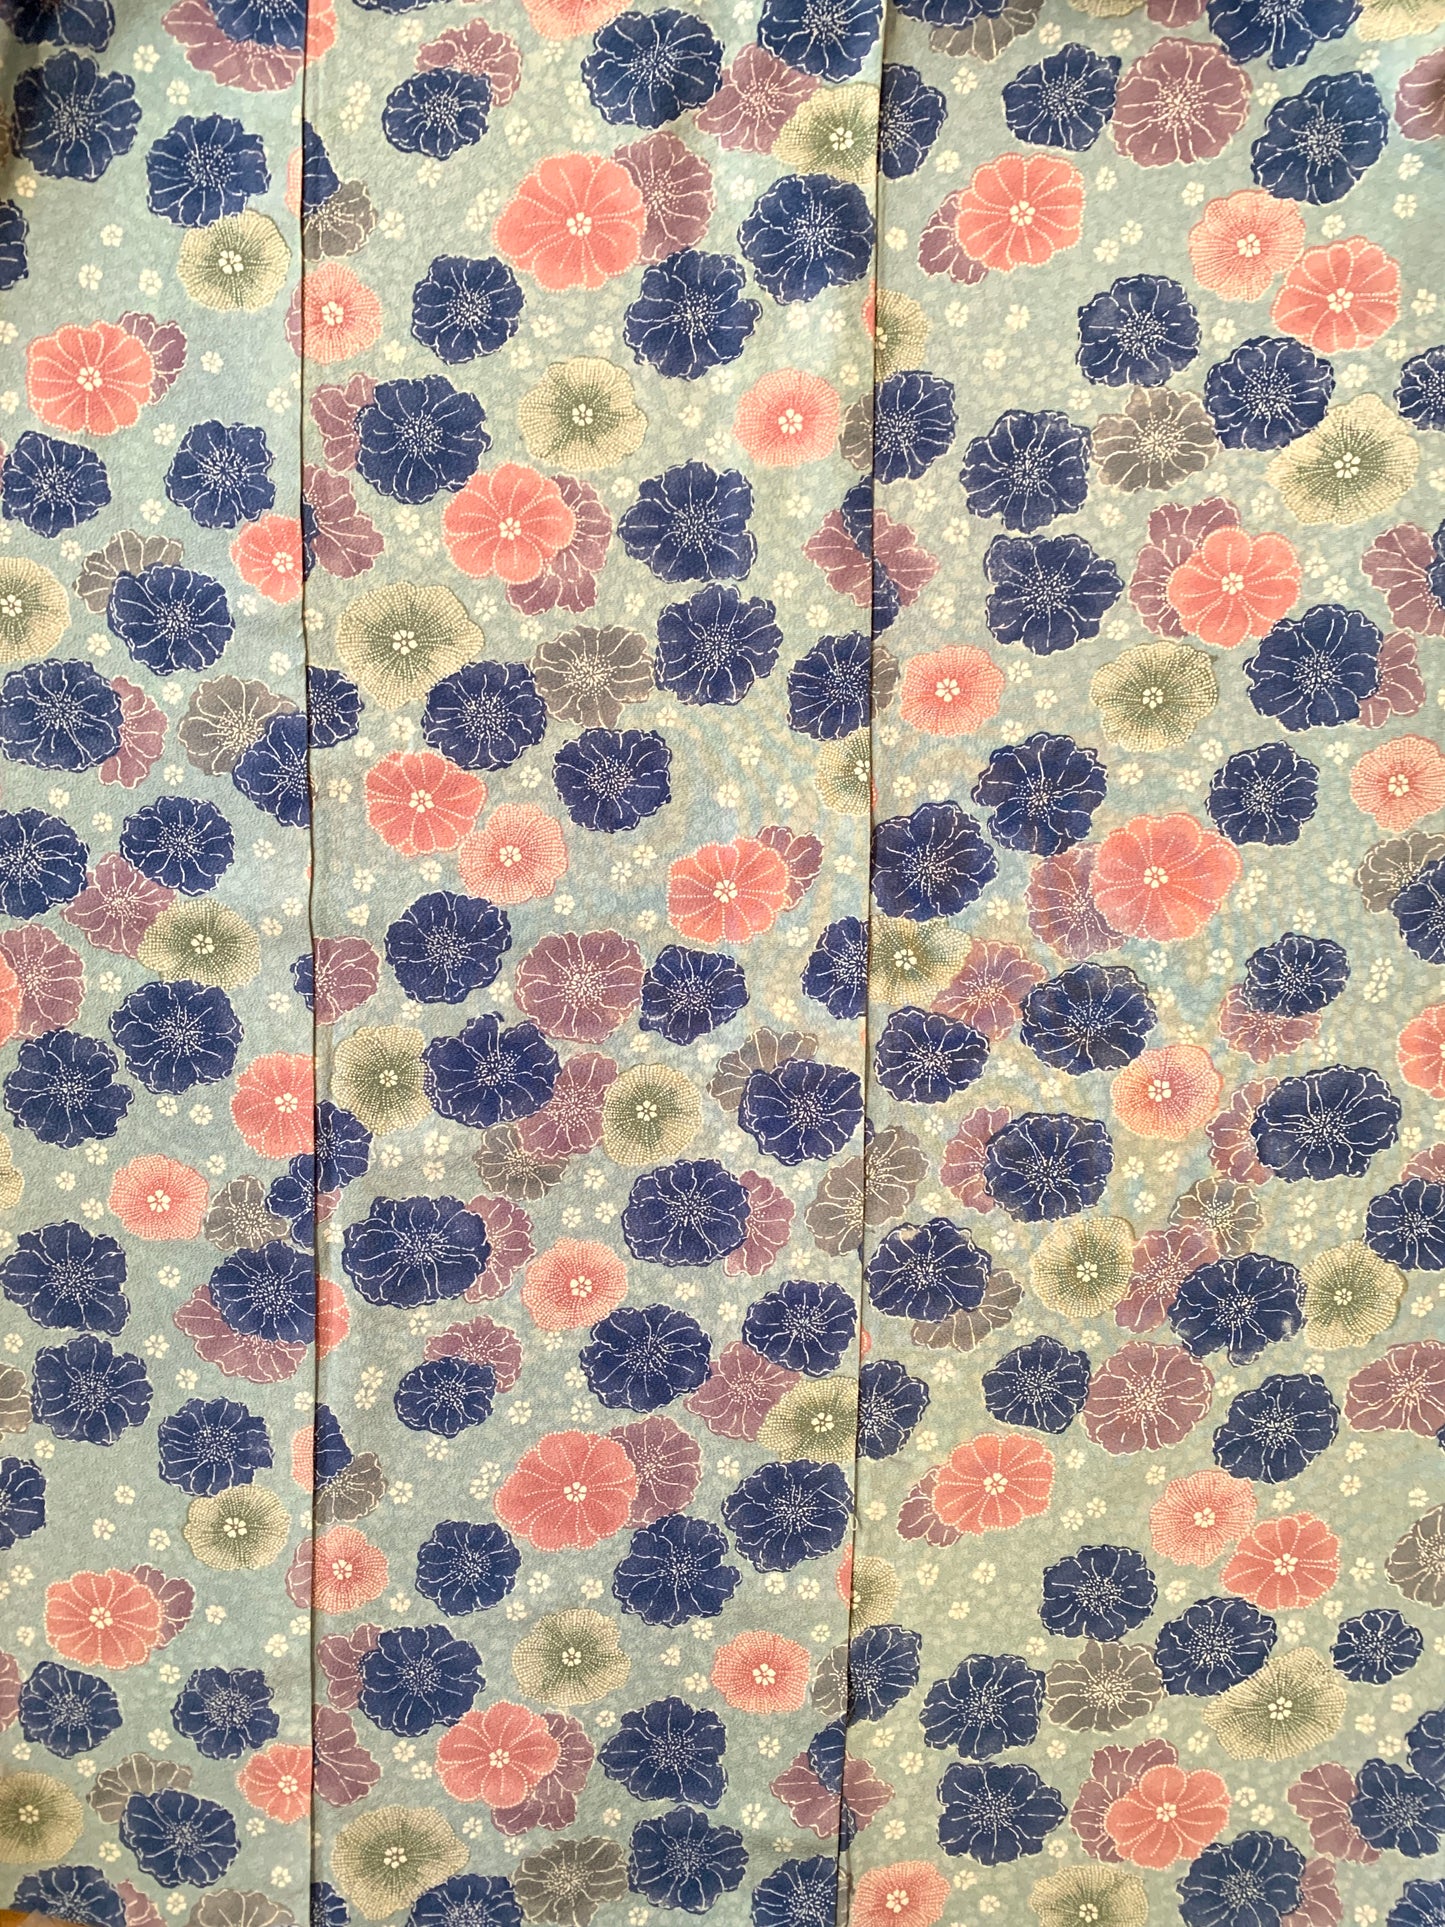 Kimono fabric for custom dress order, fabric #60